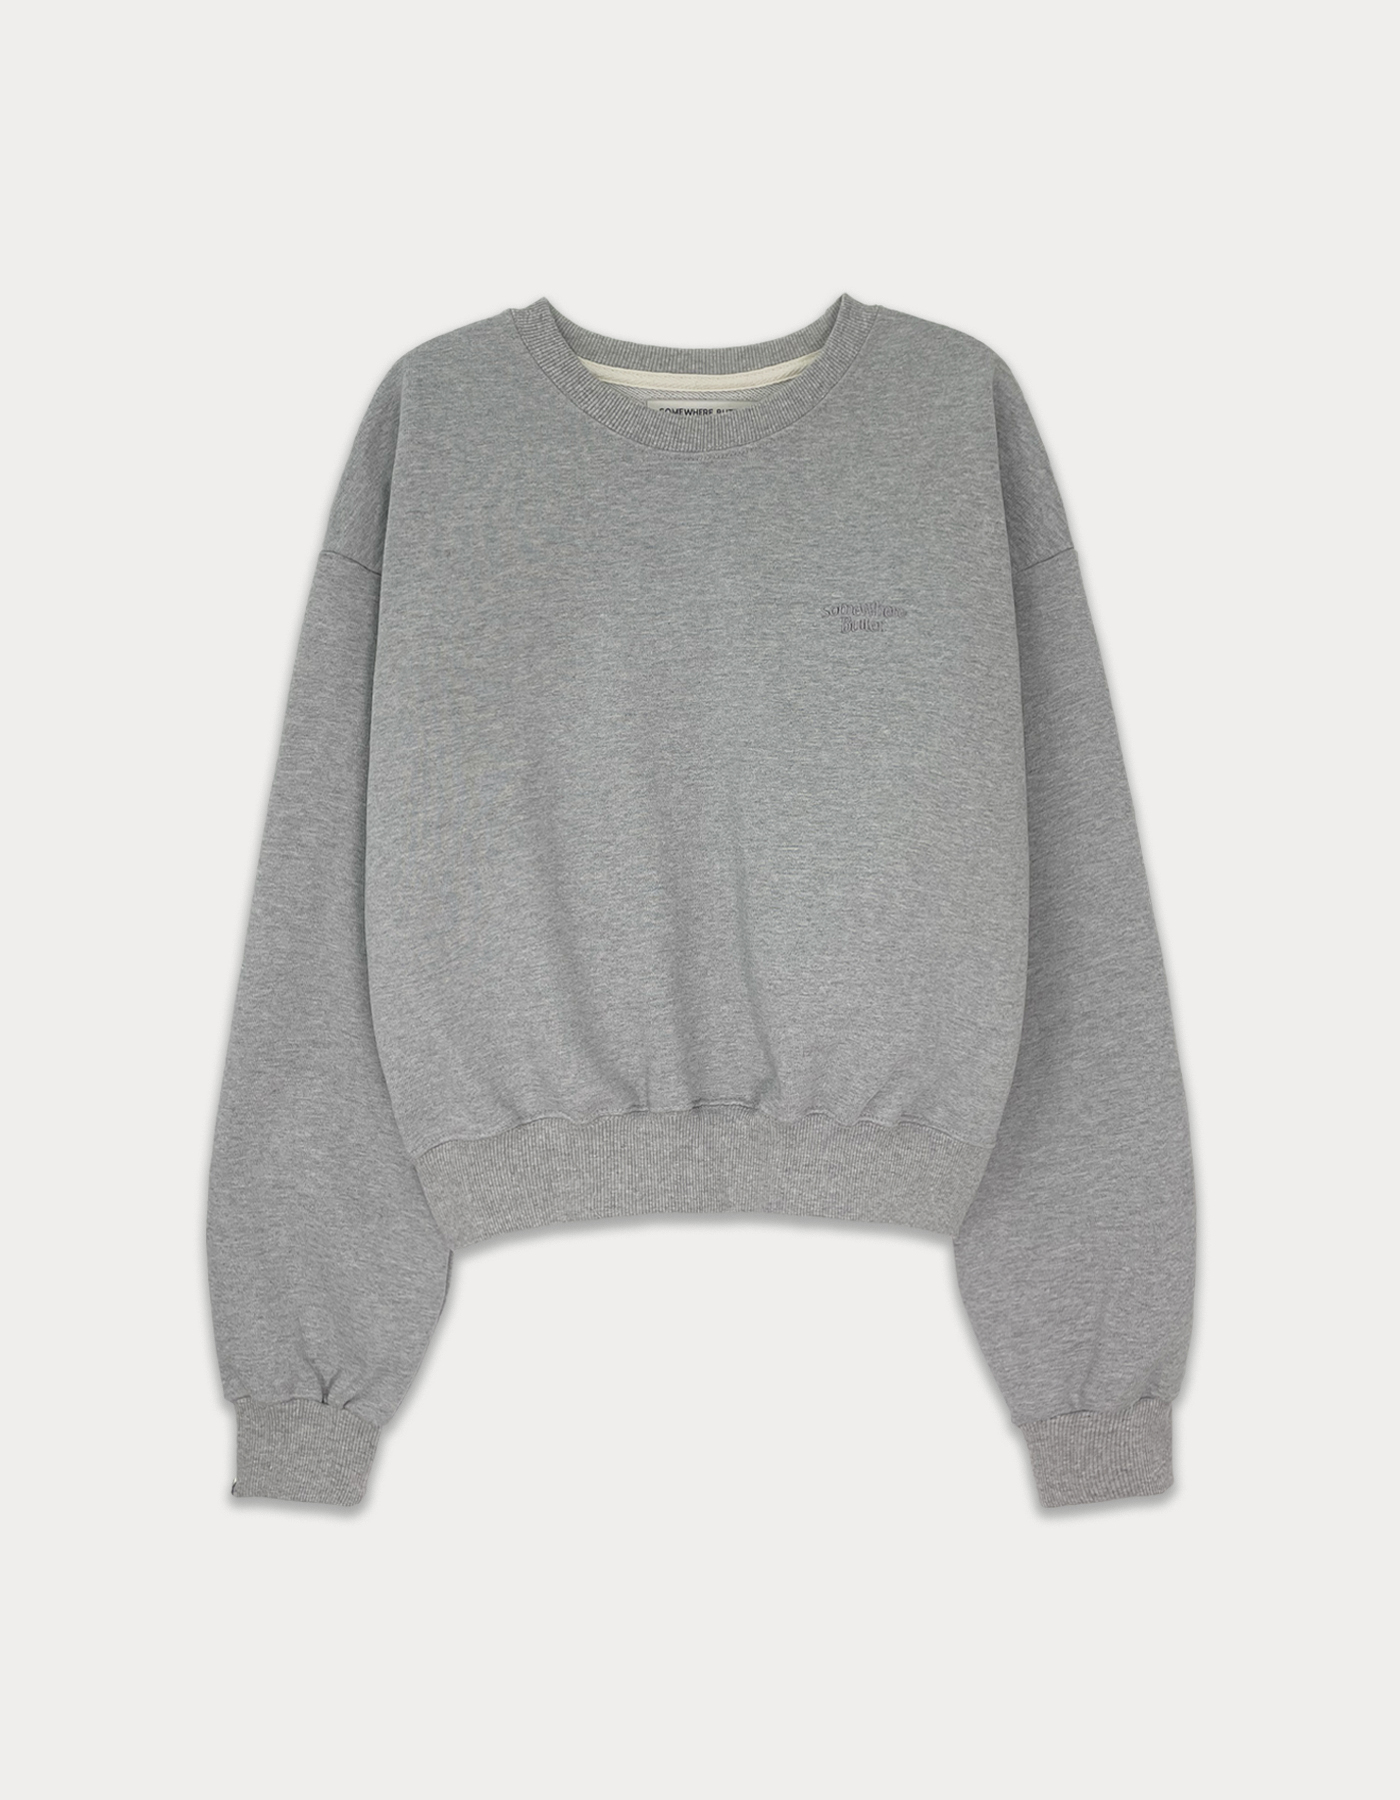 Essential sweatshirt - grey